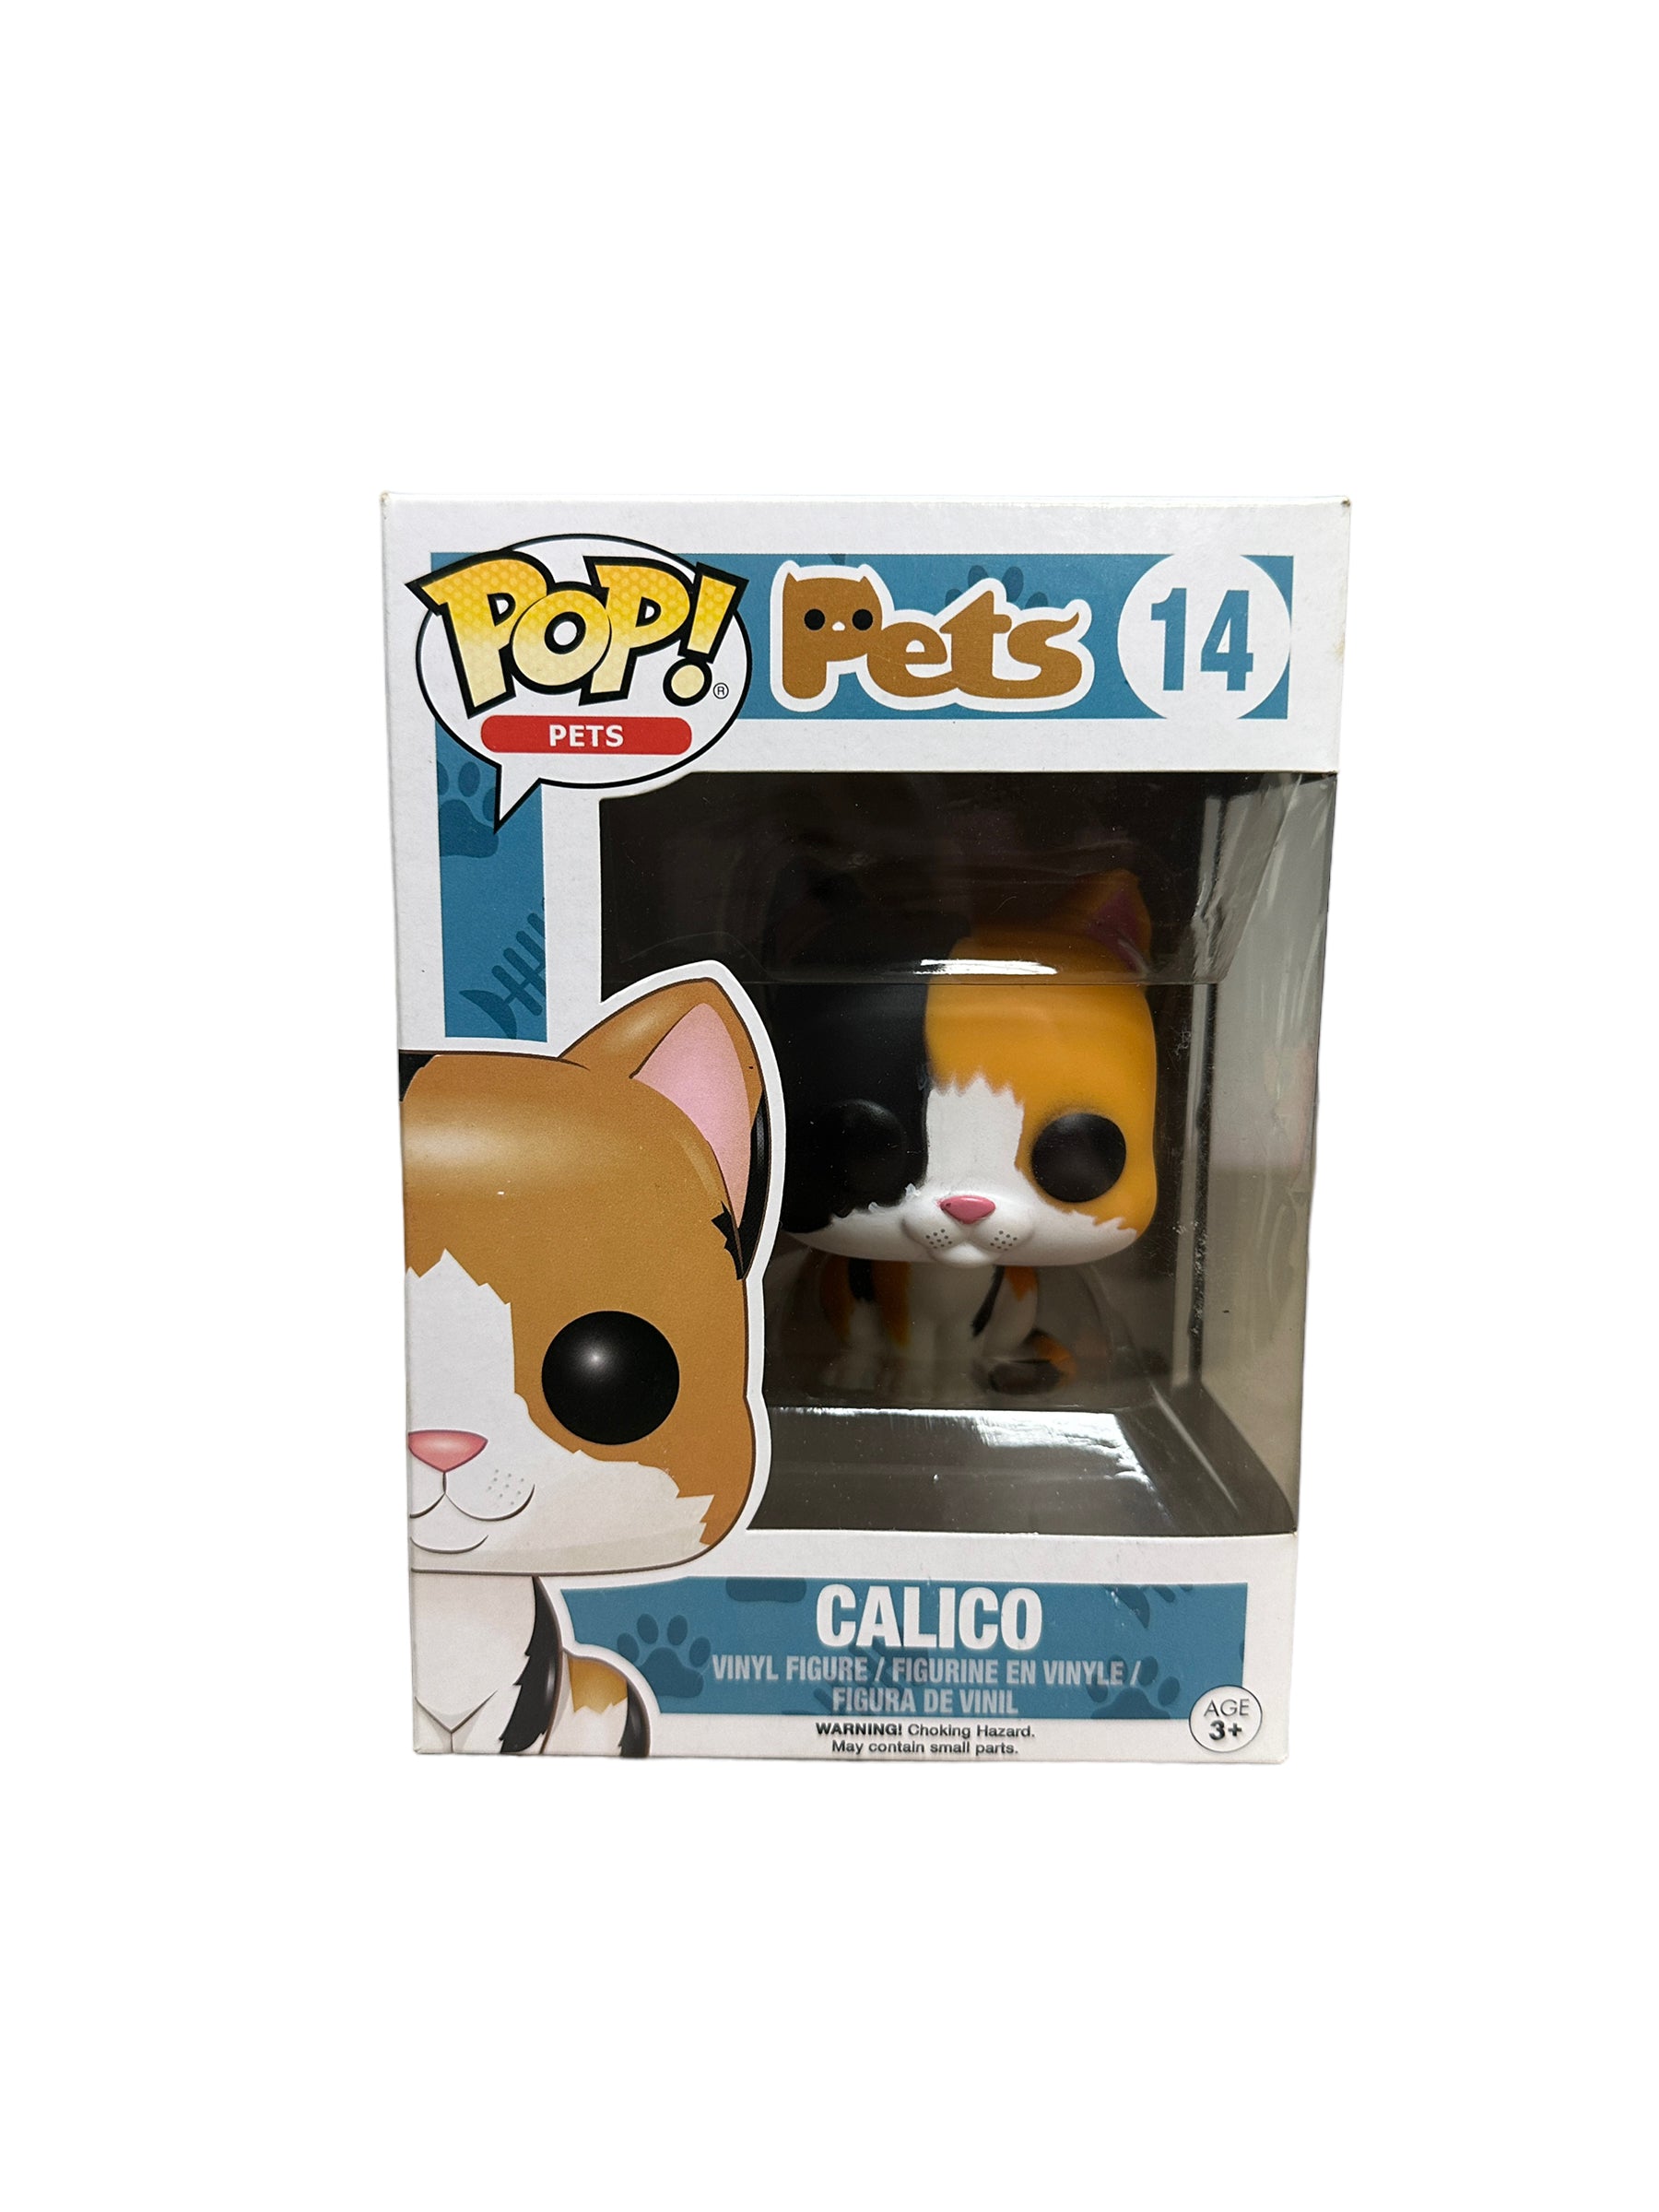 Calico #14 Funko Pop! - Pets - 2017 Pop! - Condition 7/10